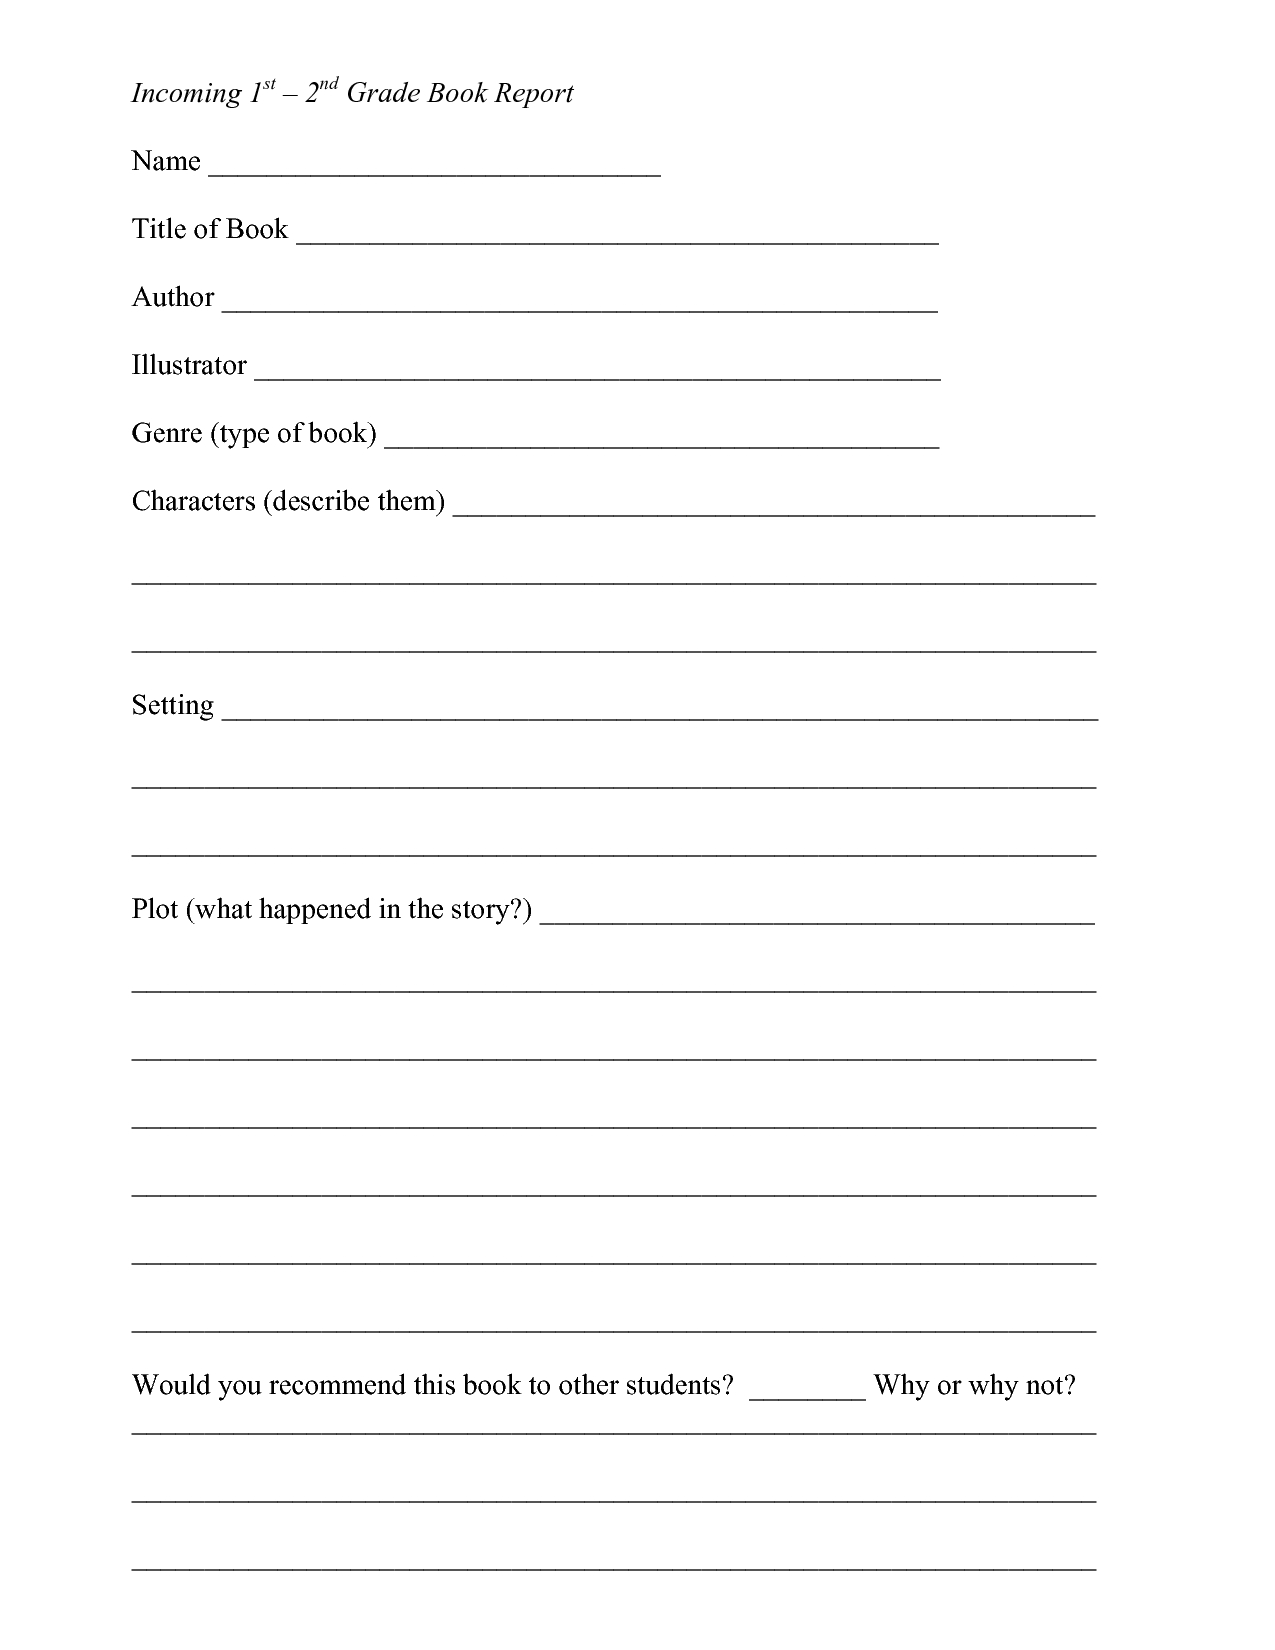 Book Report Template 2Nd Grade Free – Book Report Form Inside Book Report Template 2Nd Grade